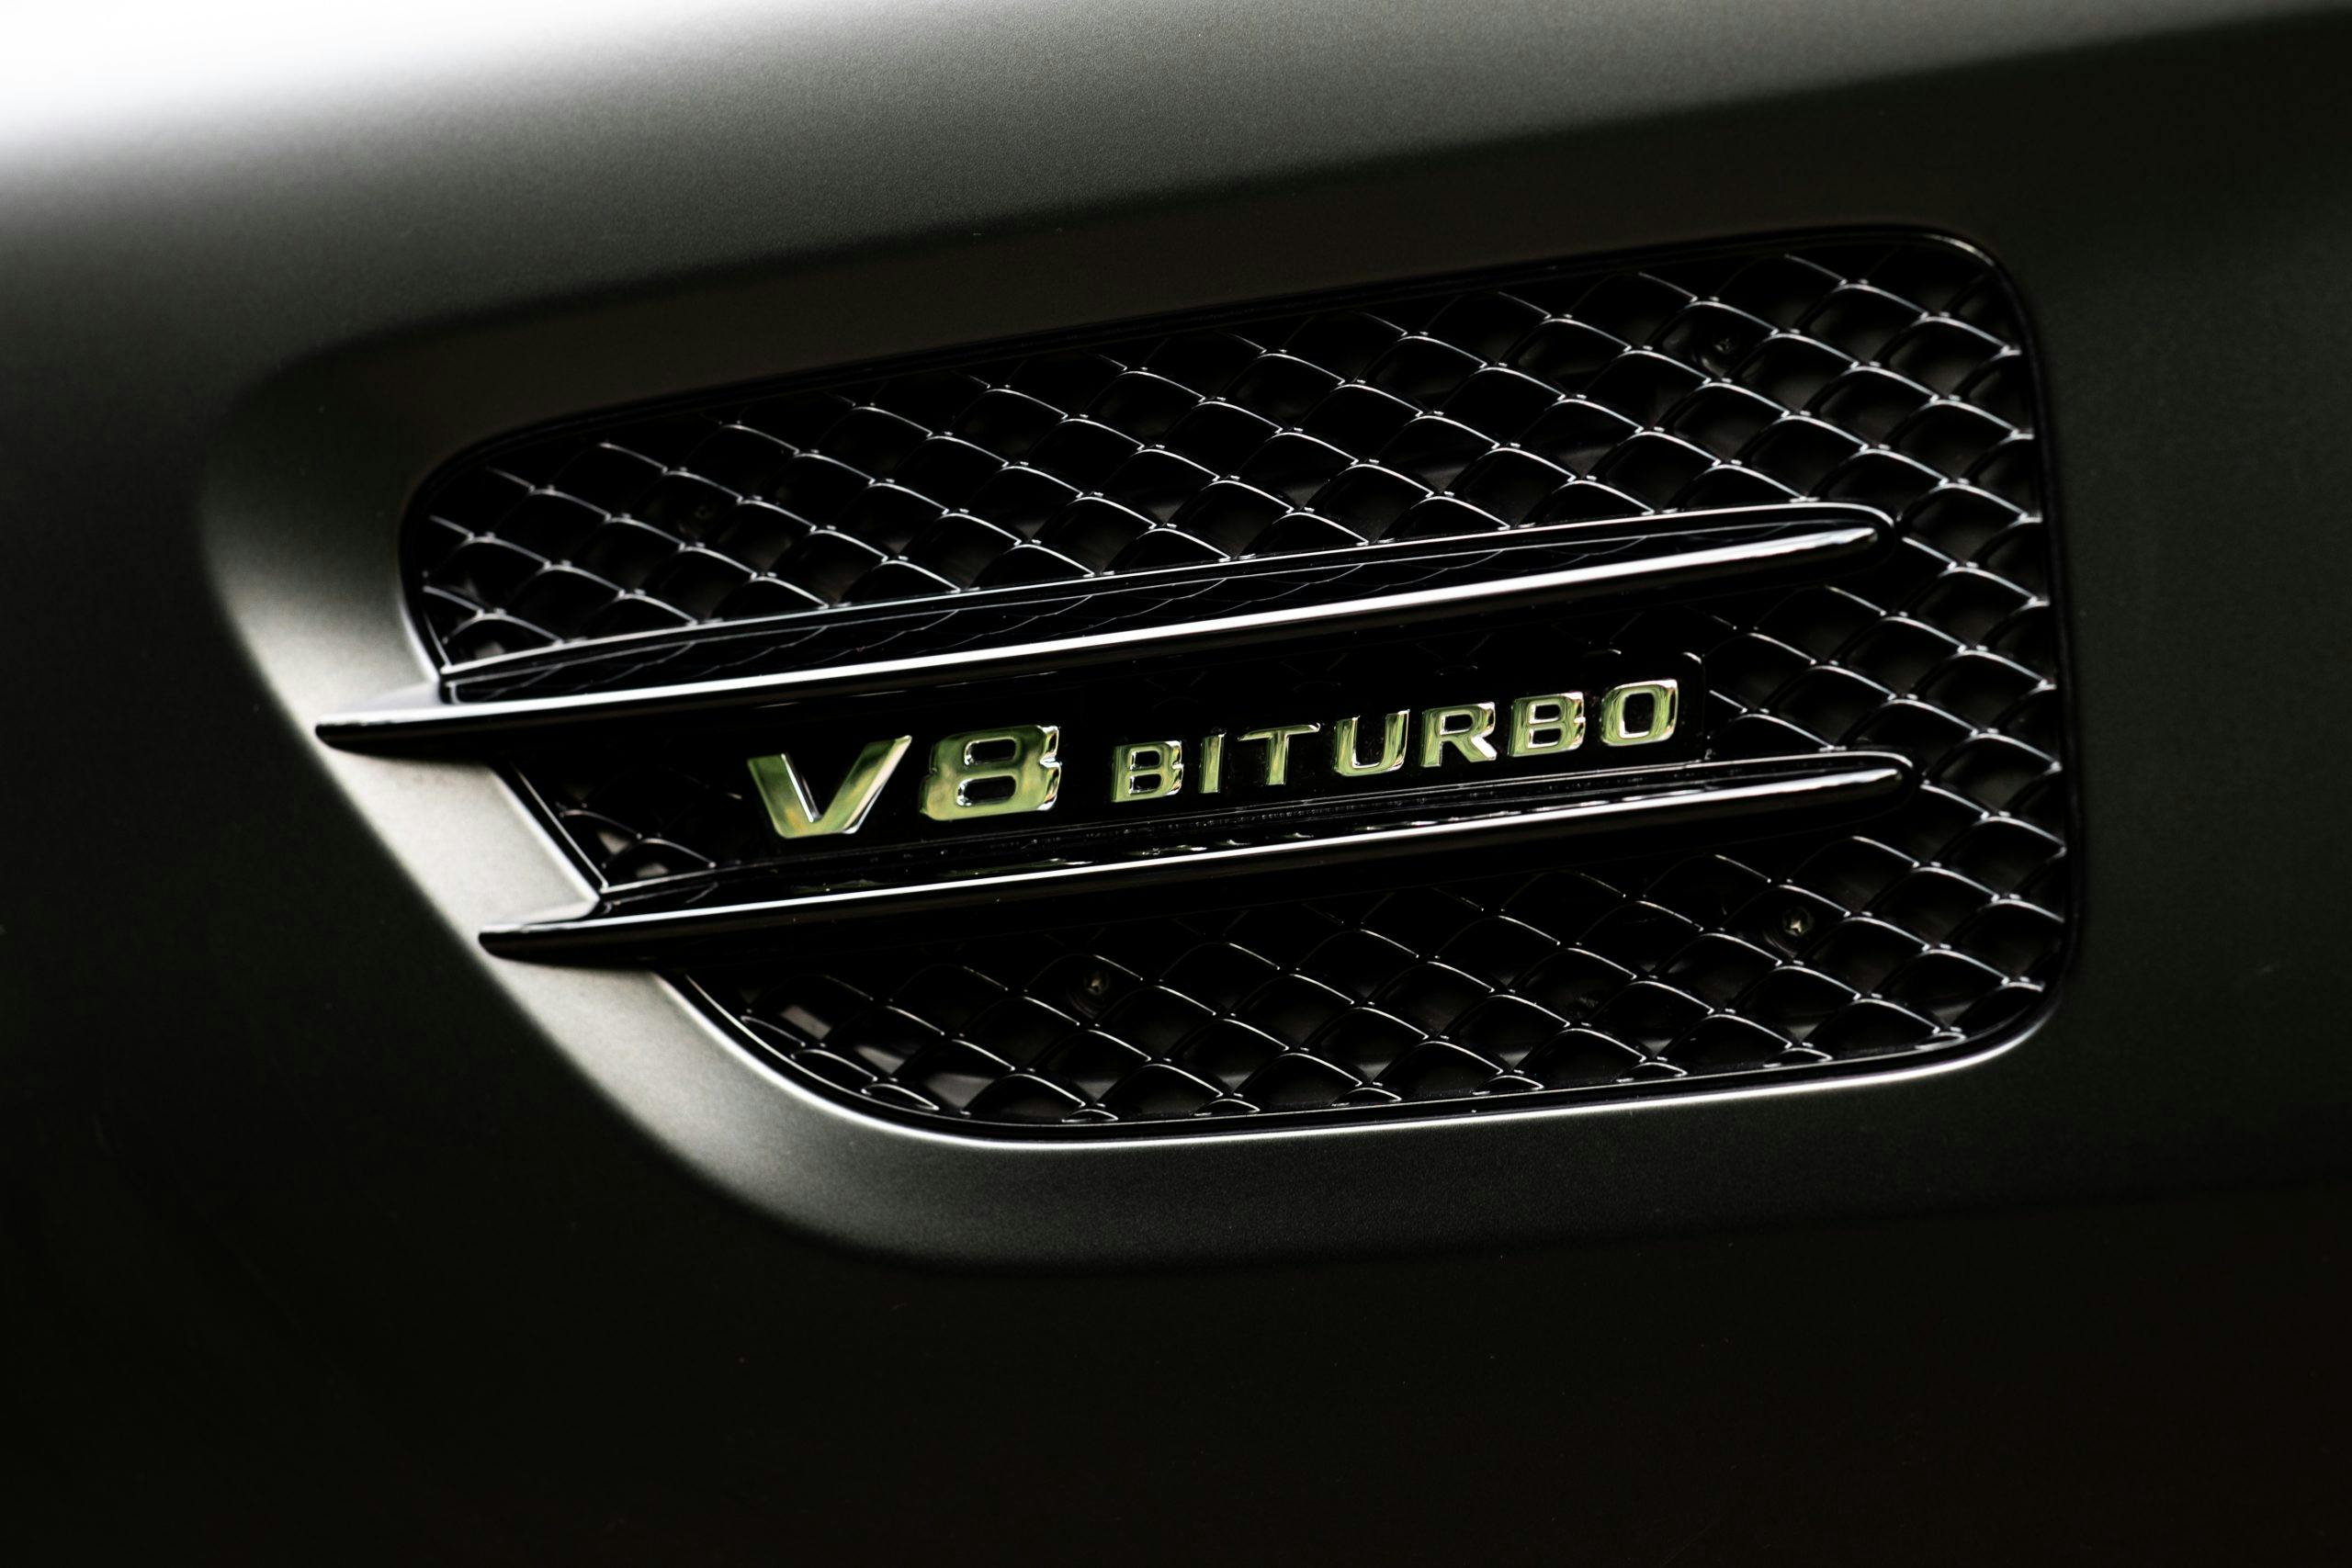 2021 Mercedes-AMG GT Stealth Edition quarter panel vent detail